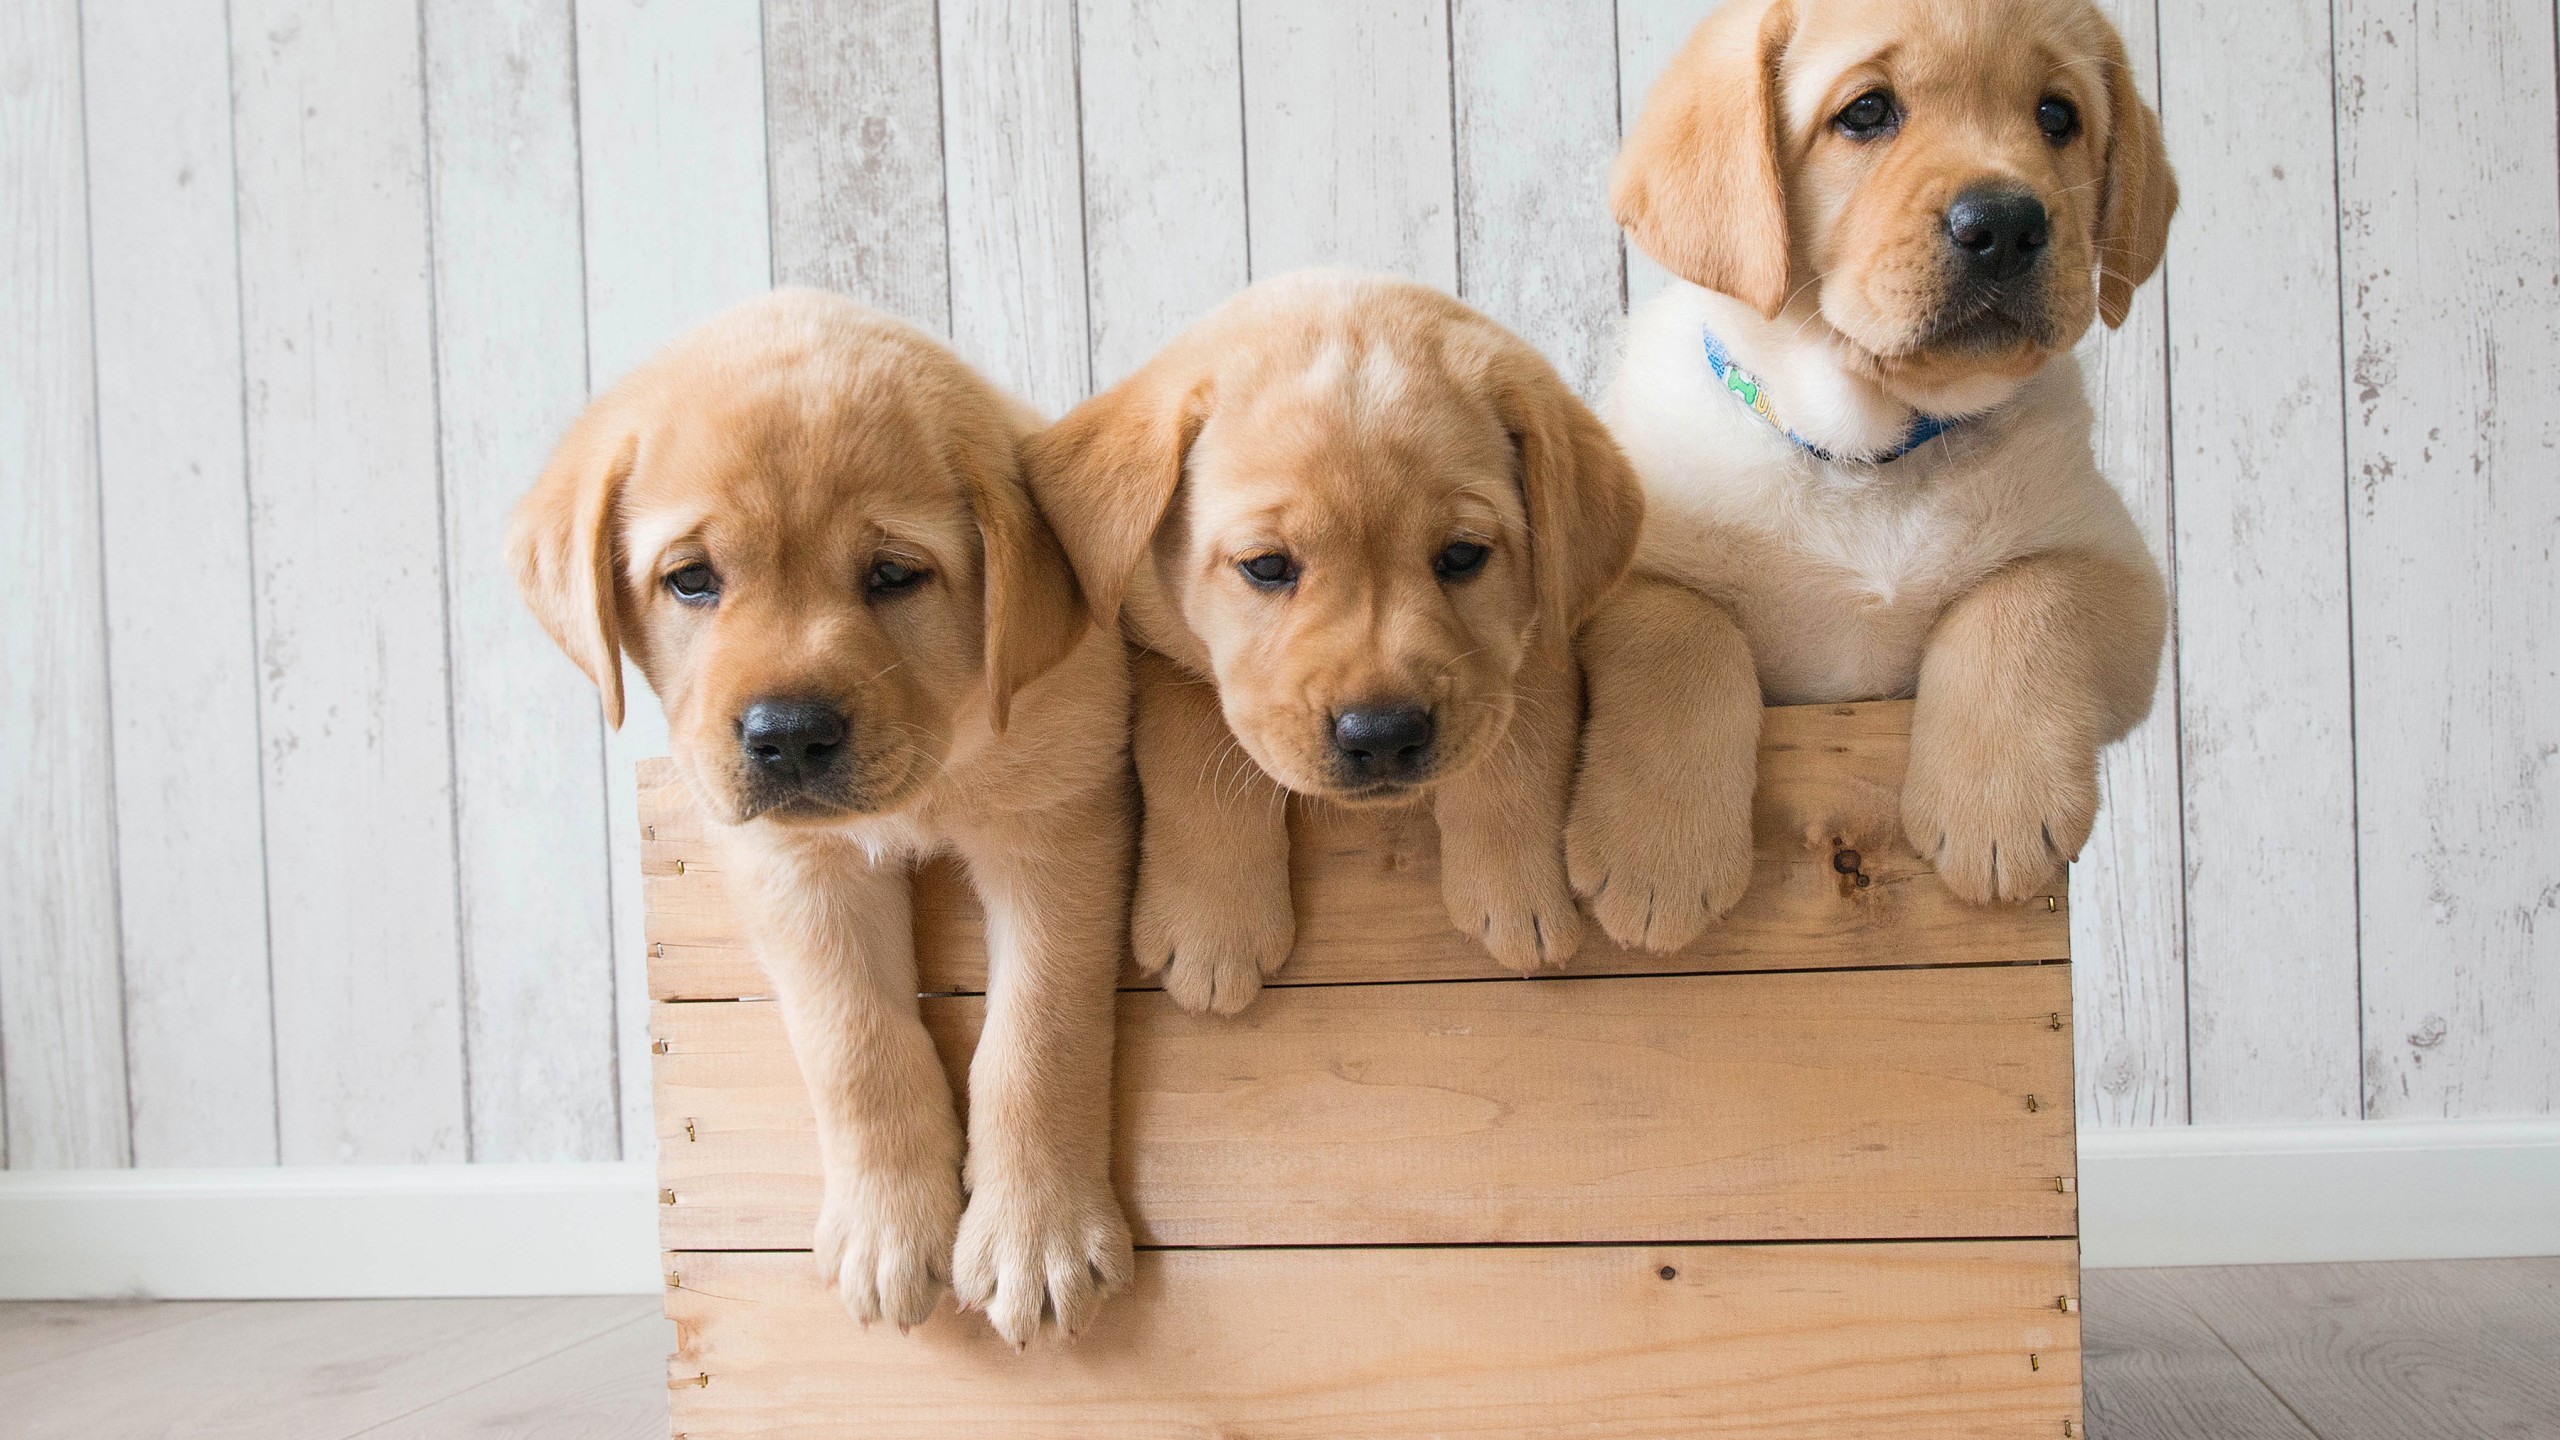 2560x1440 Animals / Cute puppies Wallpaper